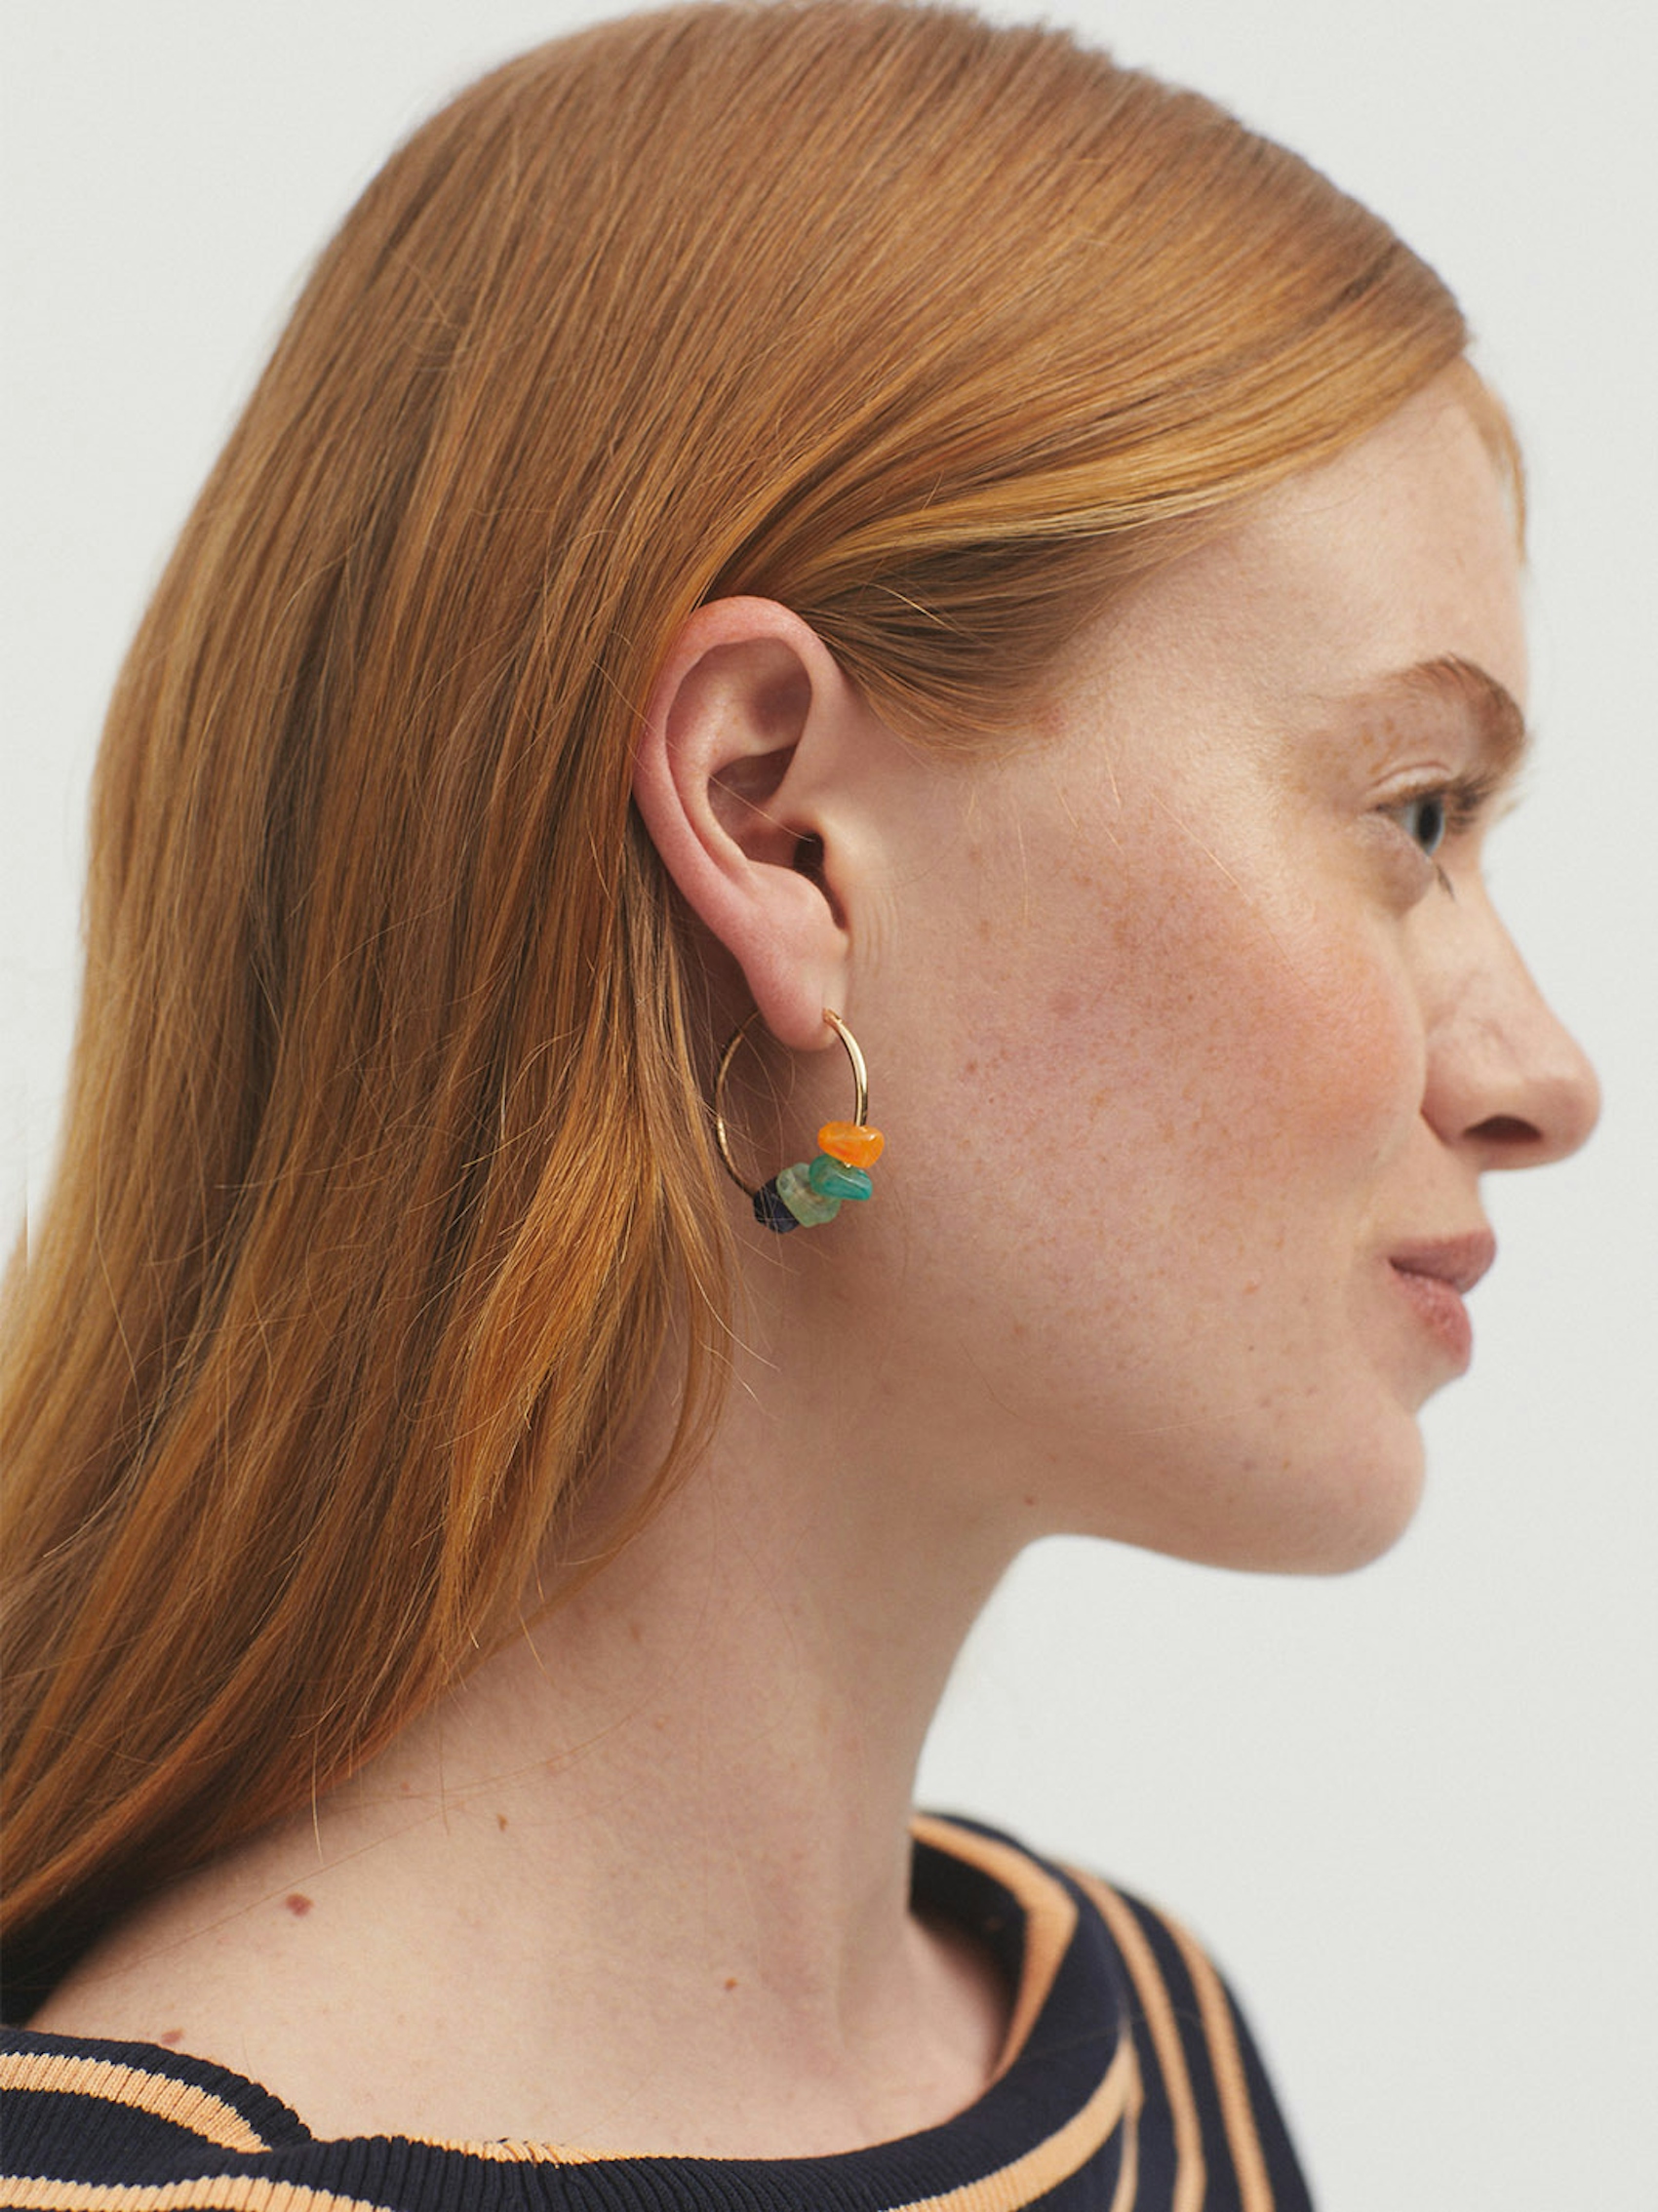 Coloured stone earrings